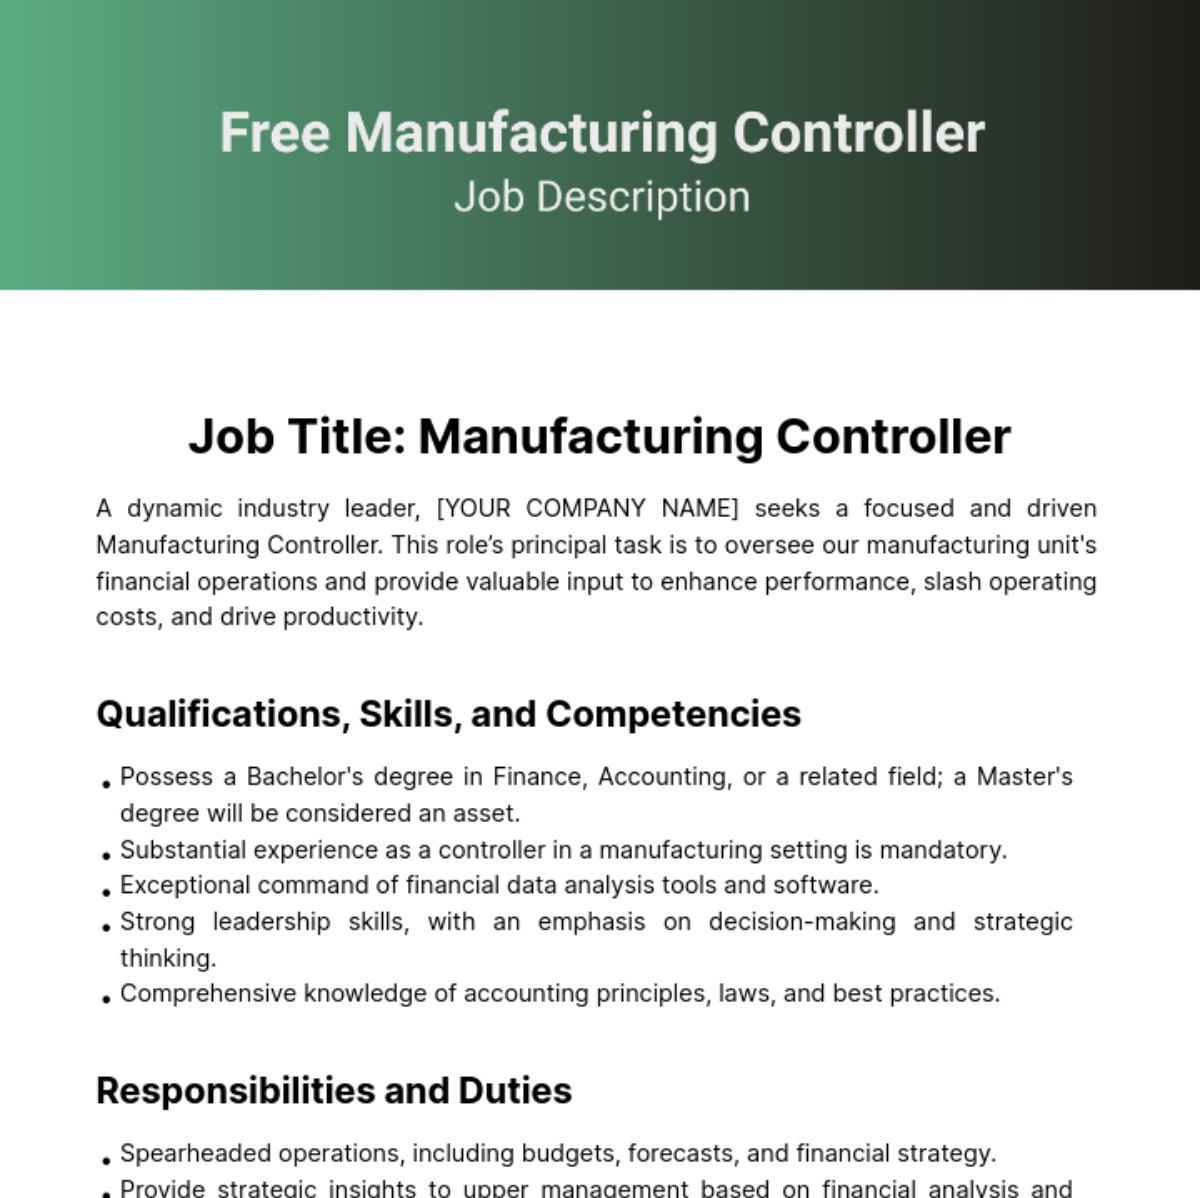 Free Manufacturing Controller Job Description Template